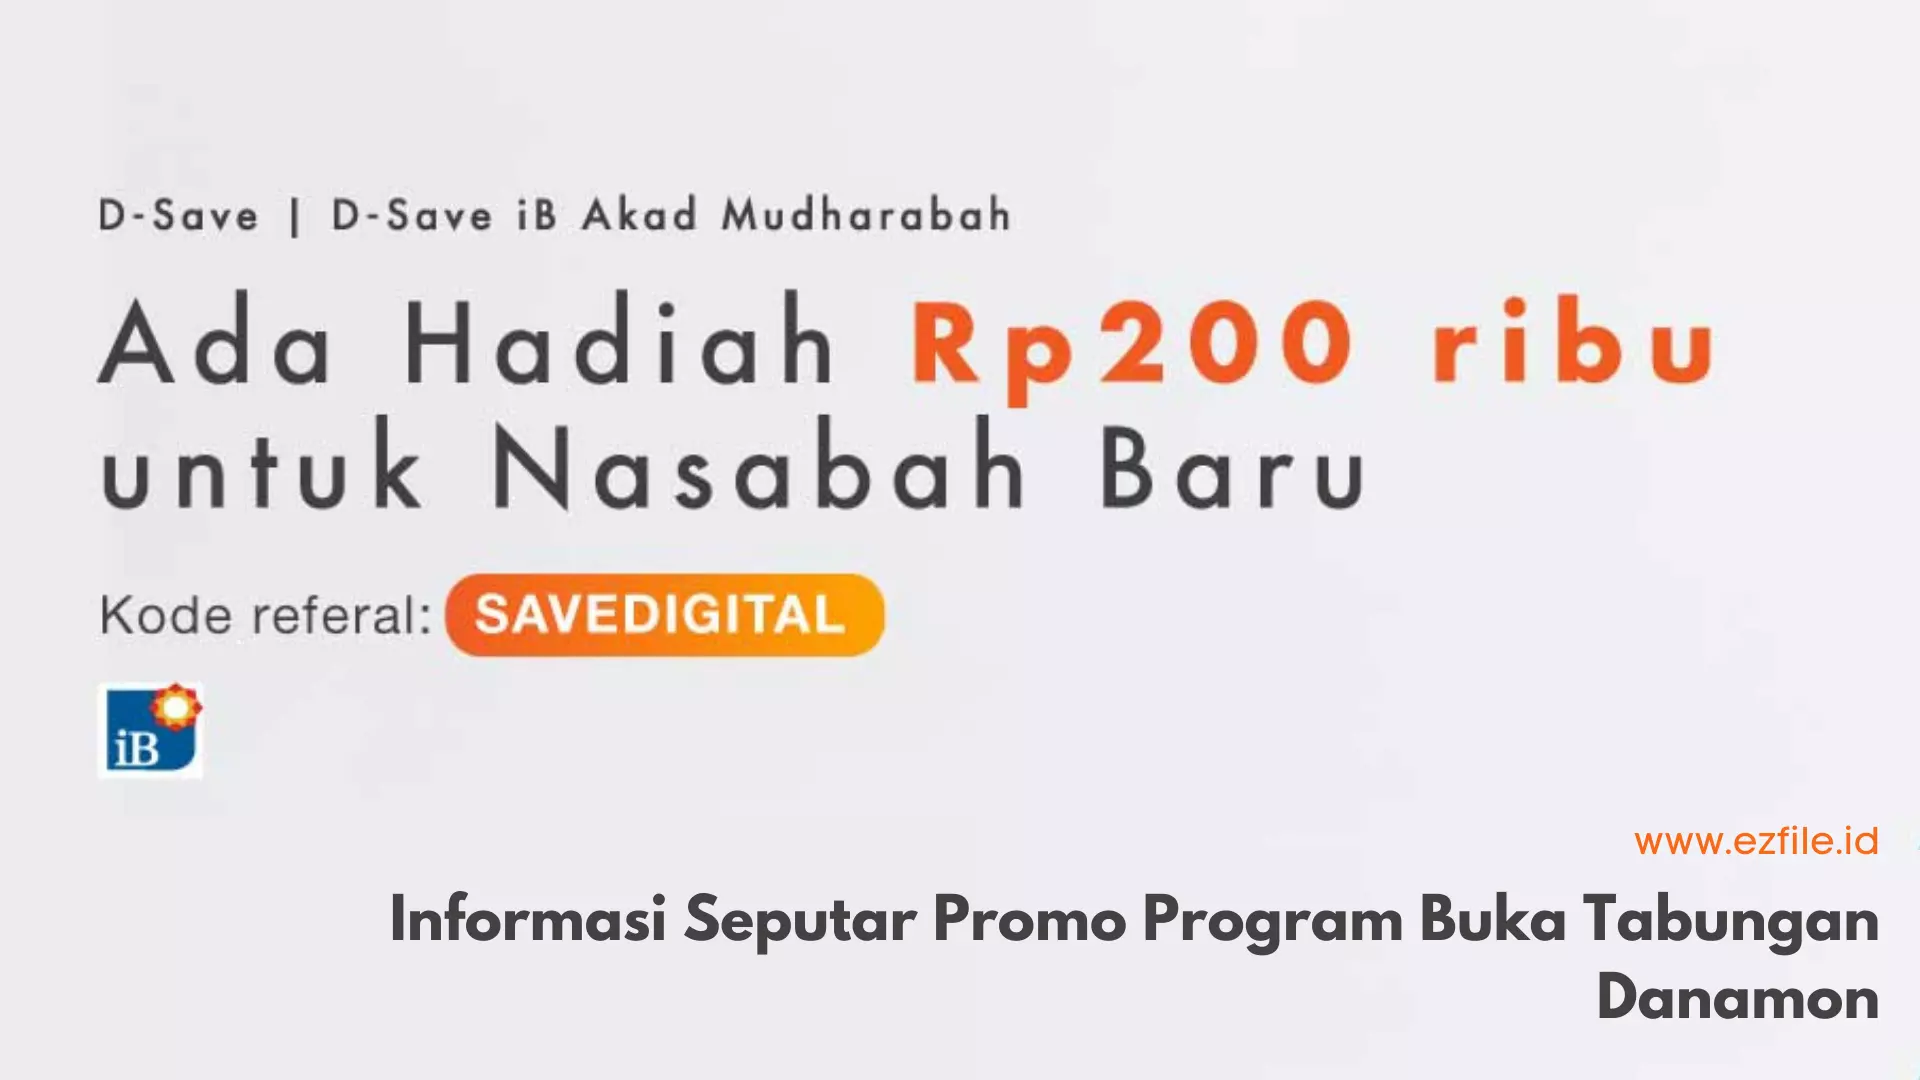 Buka Tabungan D-Save Reguler atau Syariah, Dapatkan Hadiah Rp 200rb - Promo Program Buka Tabungan Danamon @ezfileid